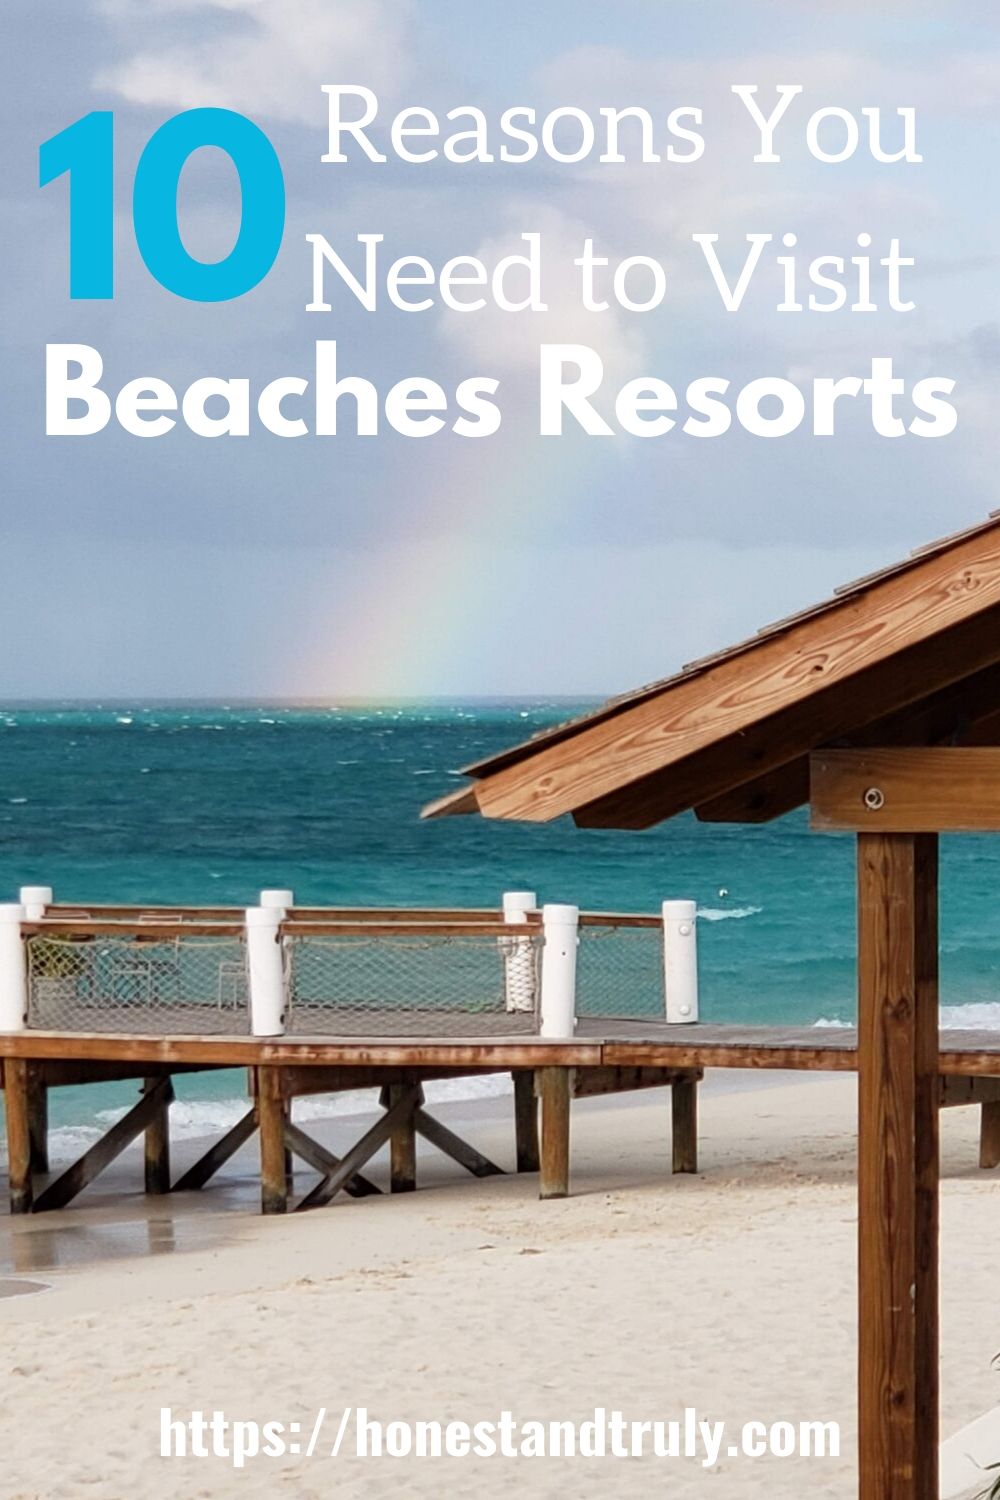 Reasons to visit Beaches Resorts